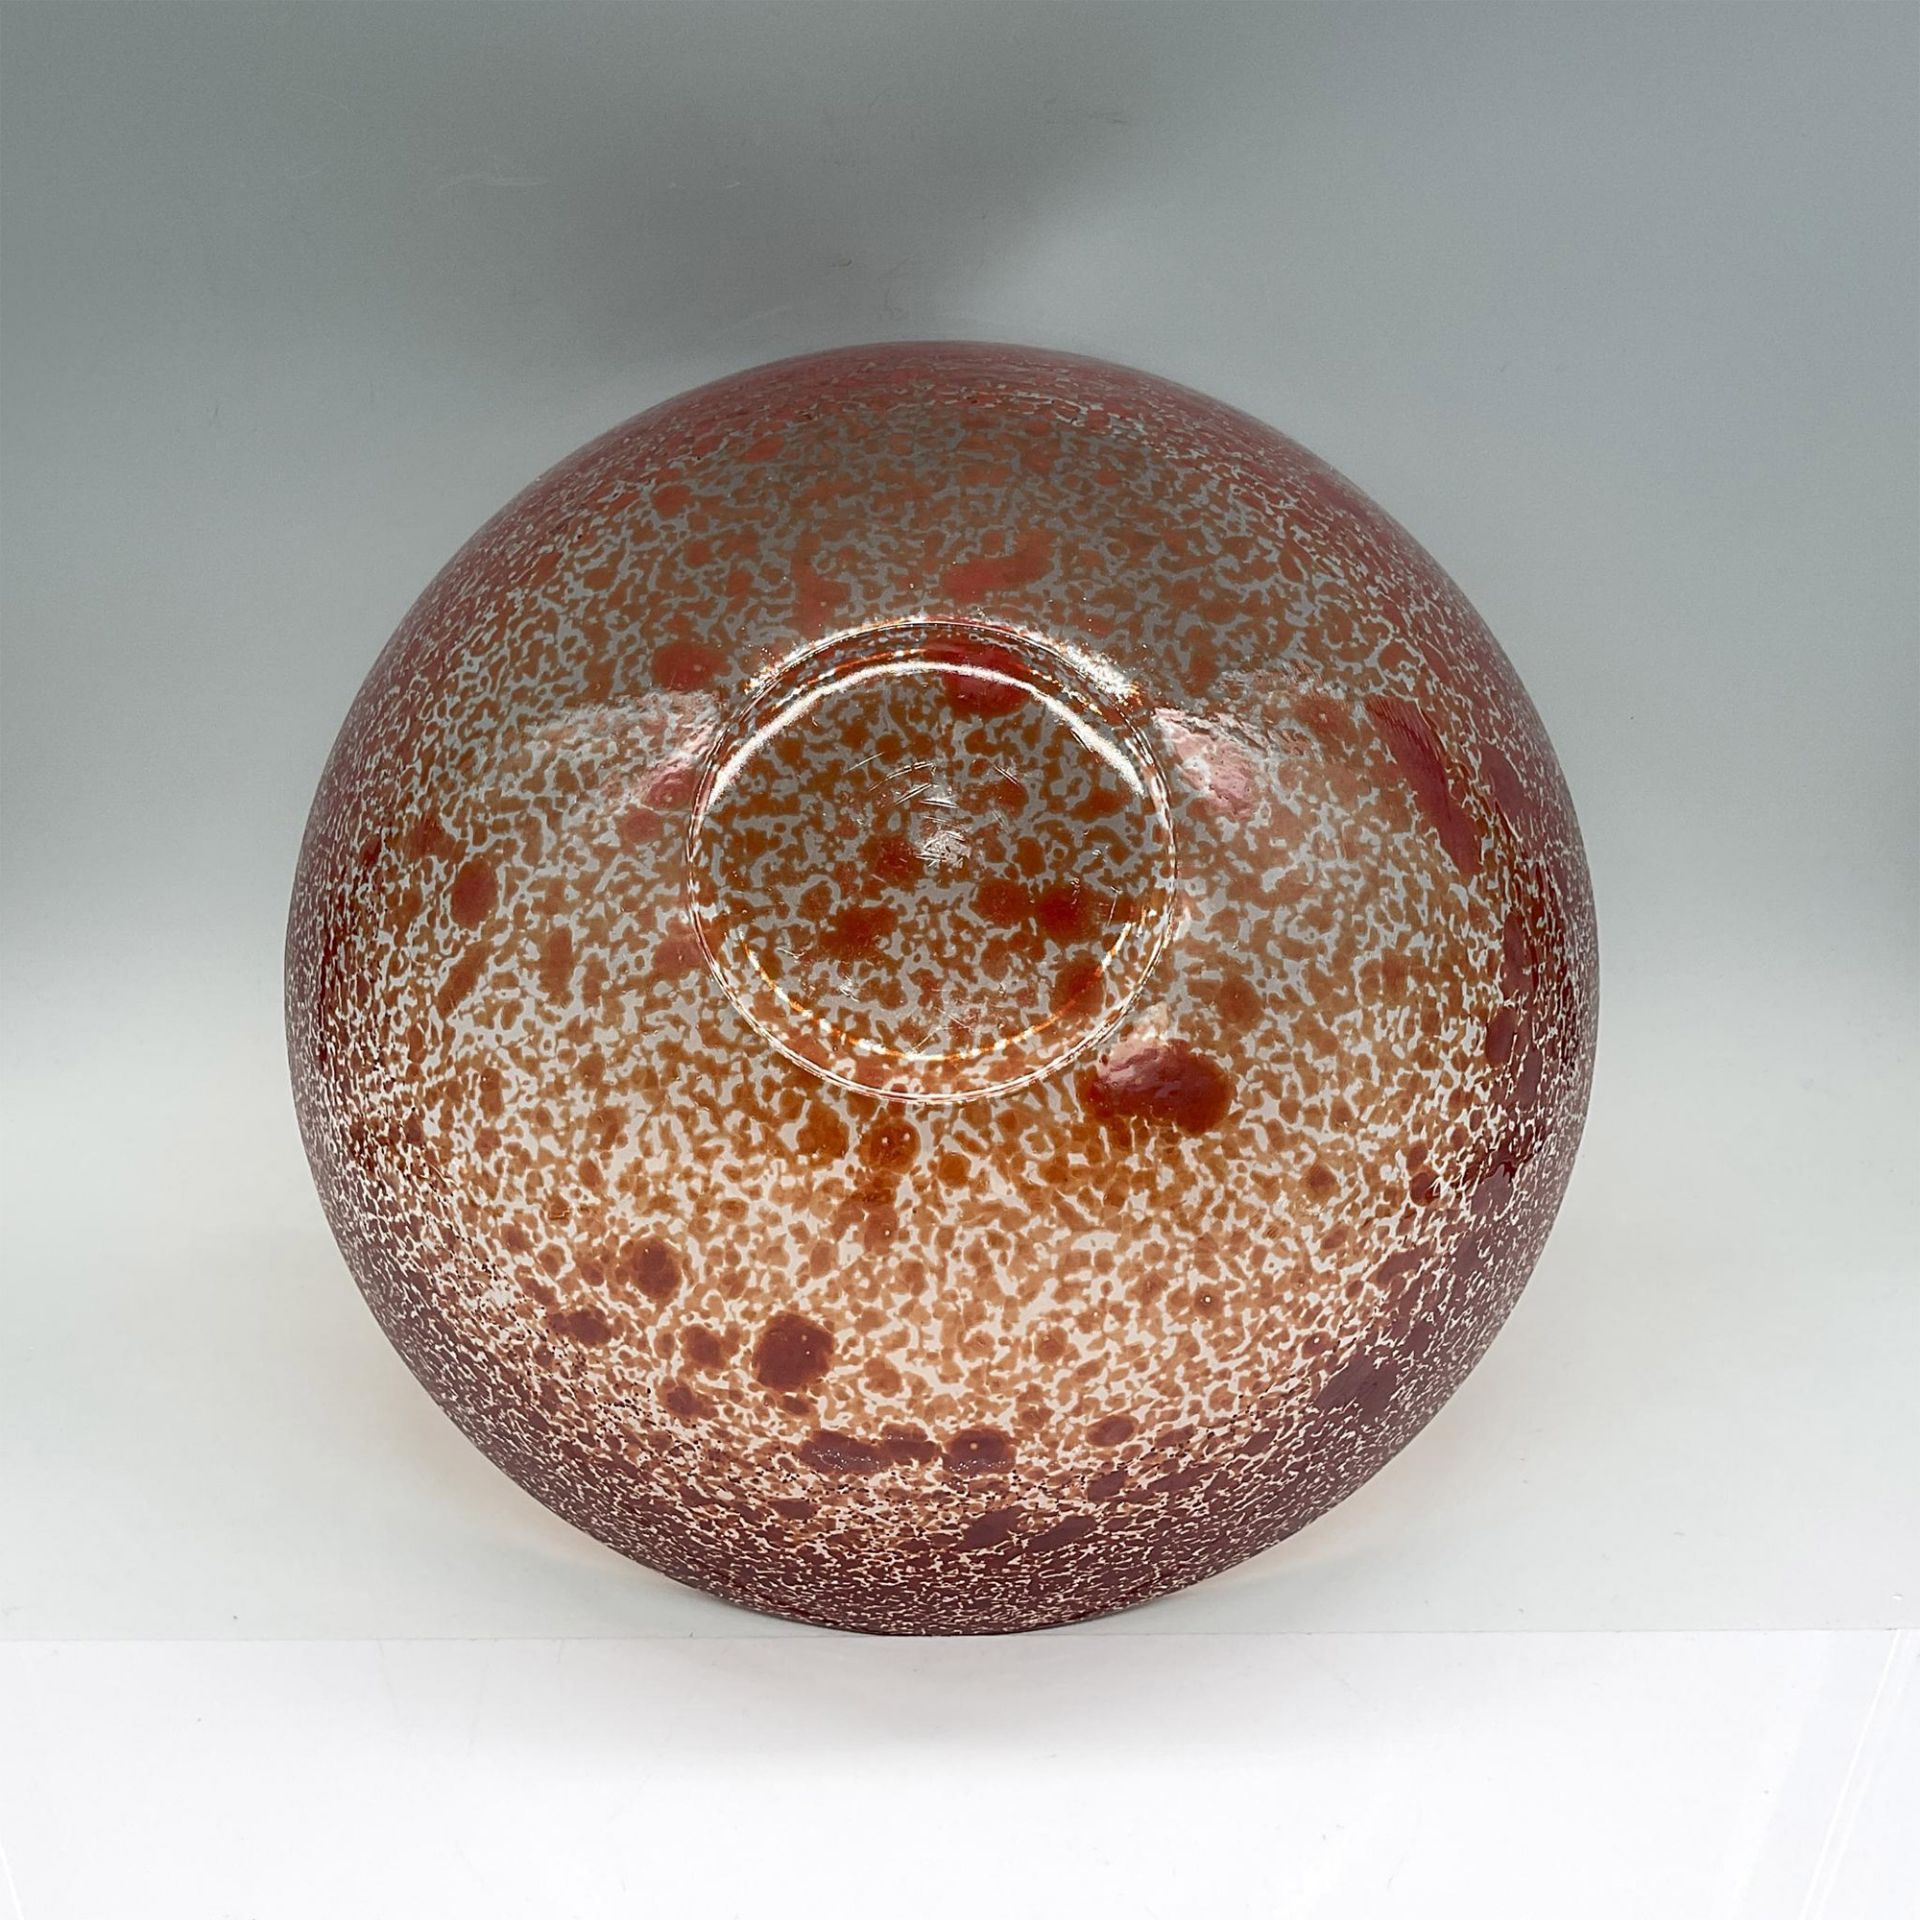 Kosta Boda Glass Bowl, Tellus by Anna Ehrner - Image 3 of 4